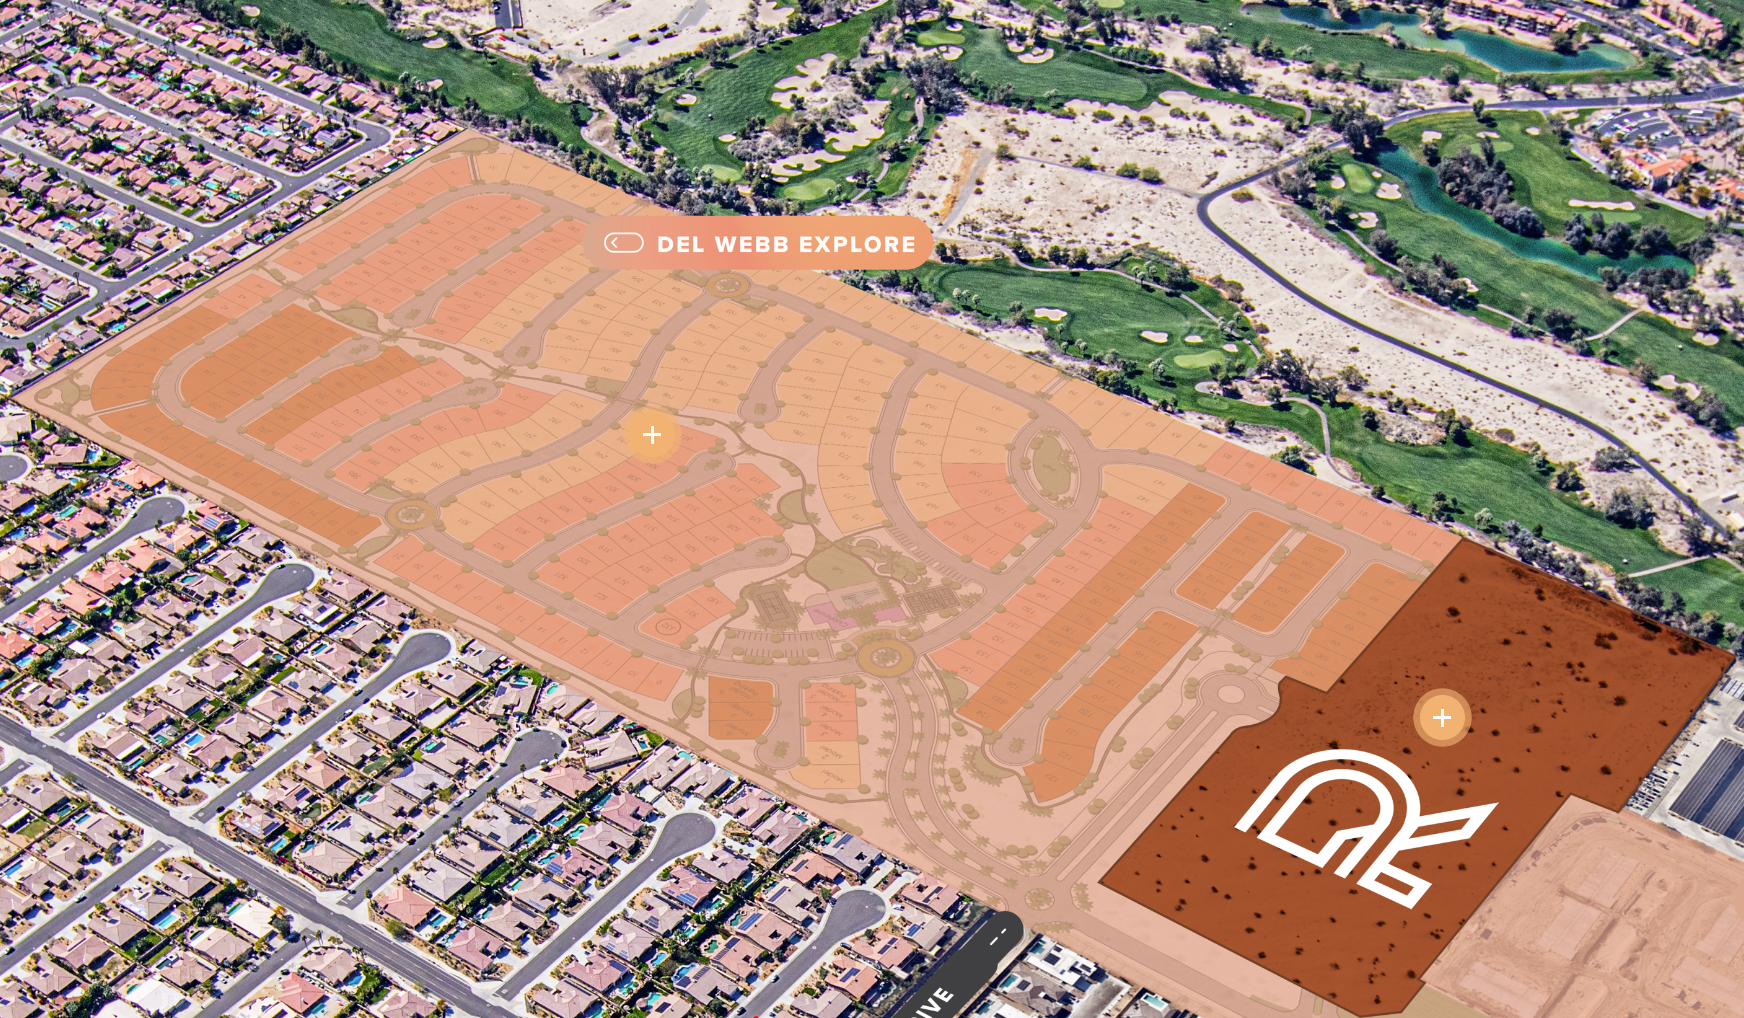 Del Webb Explore Palm Desert site plan aerial image.